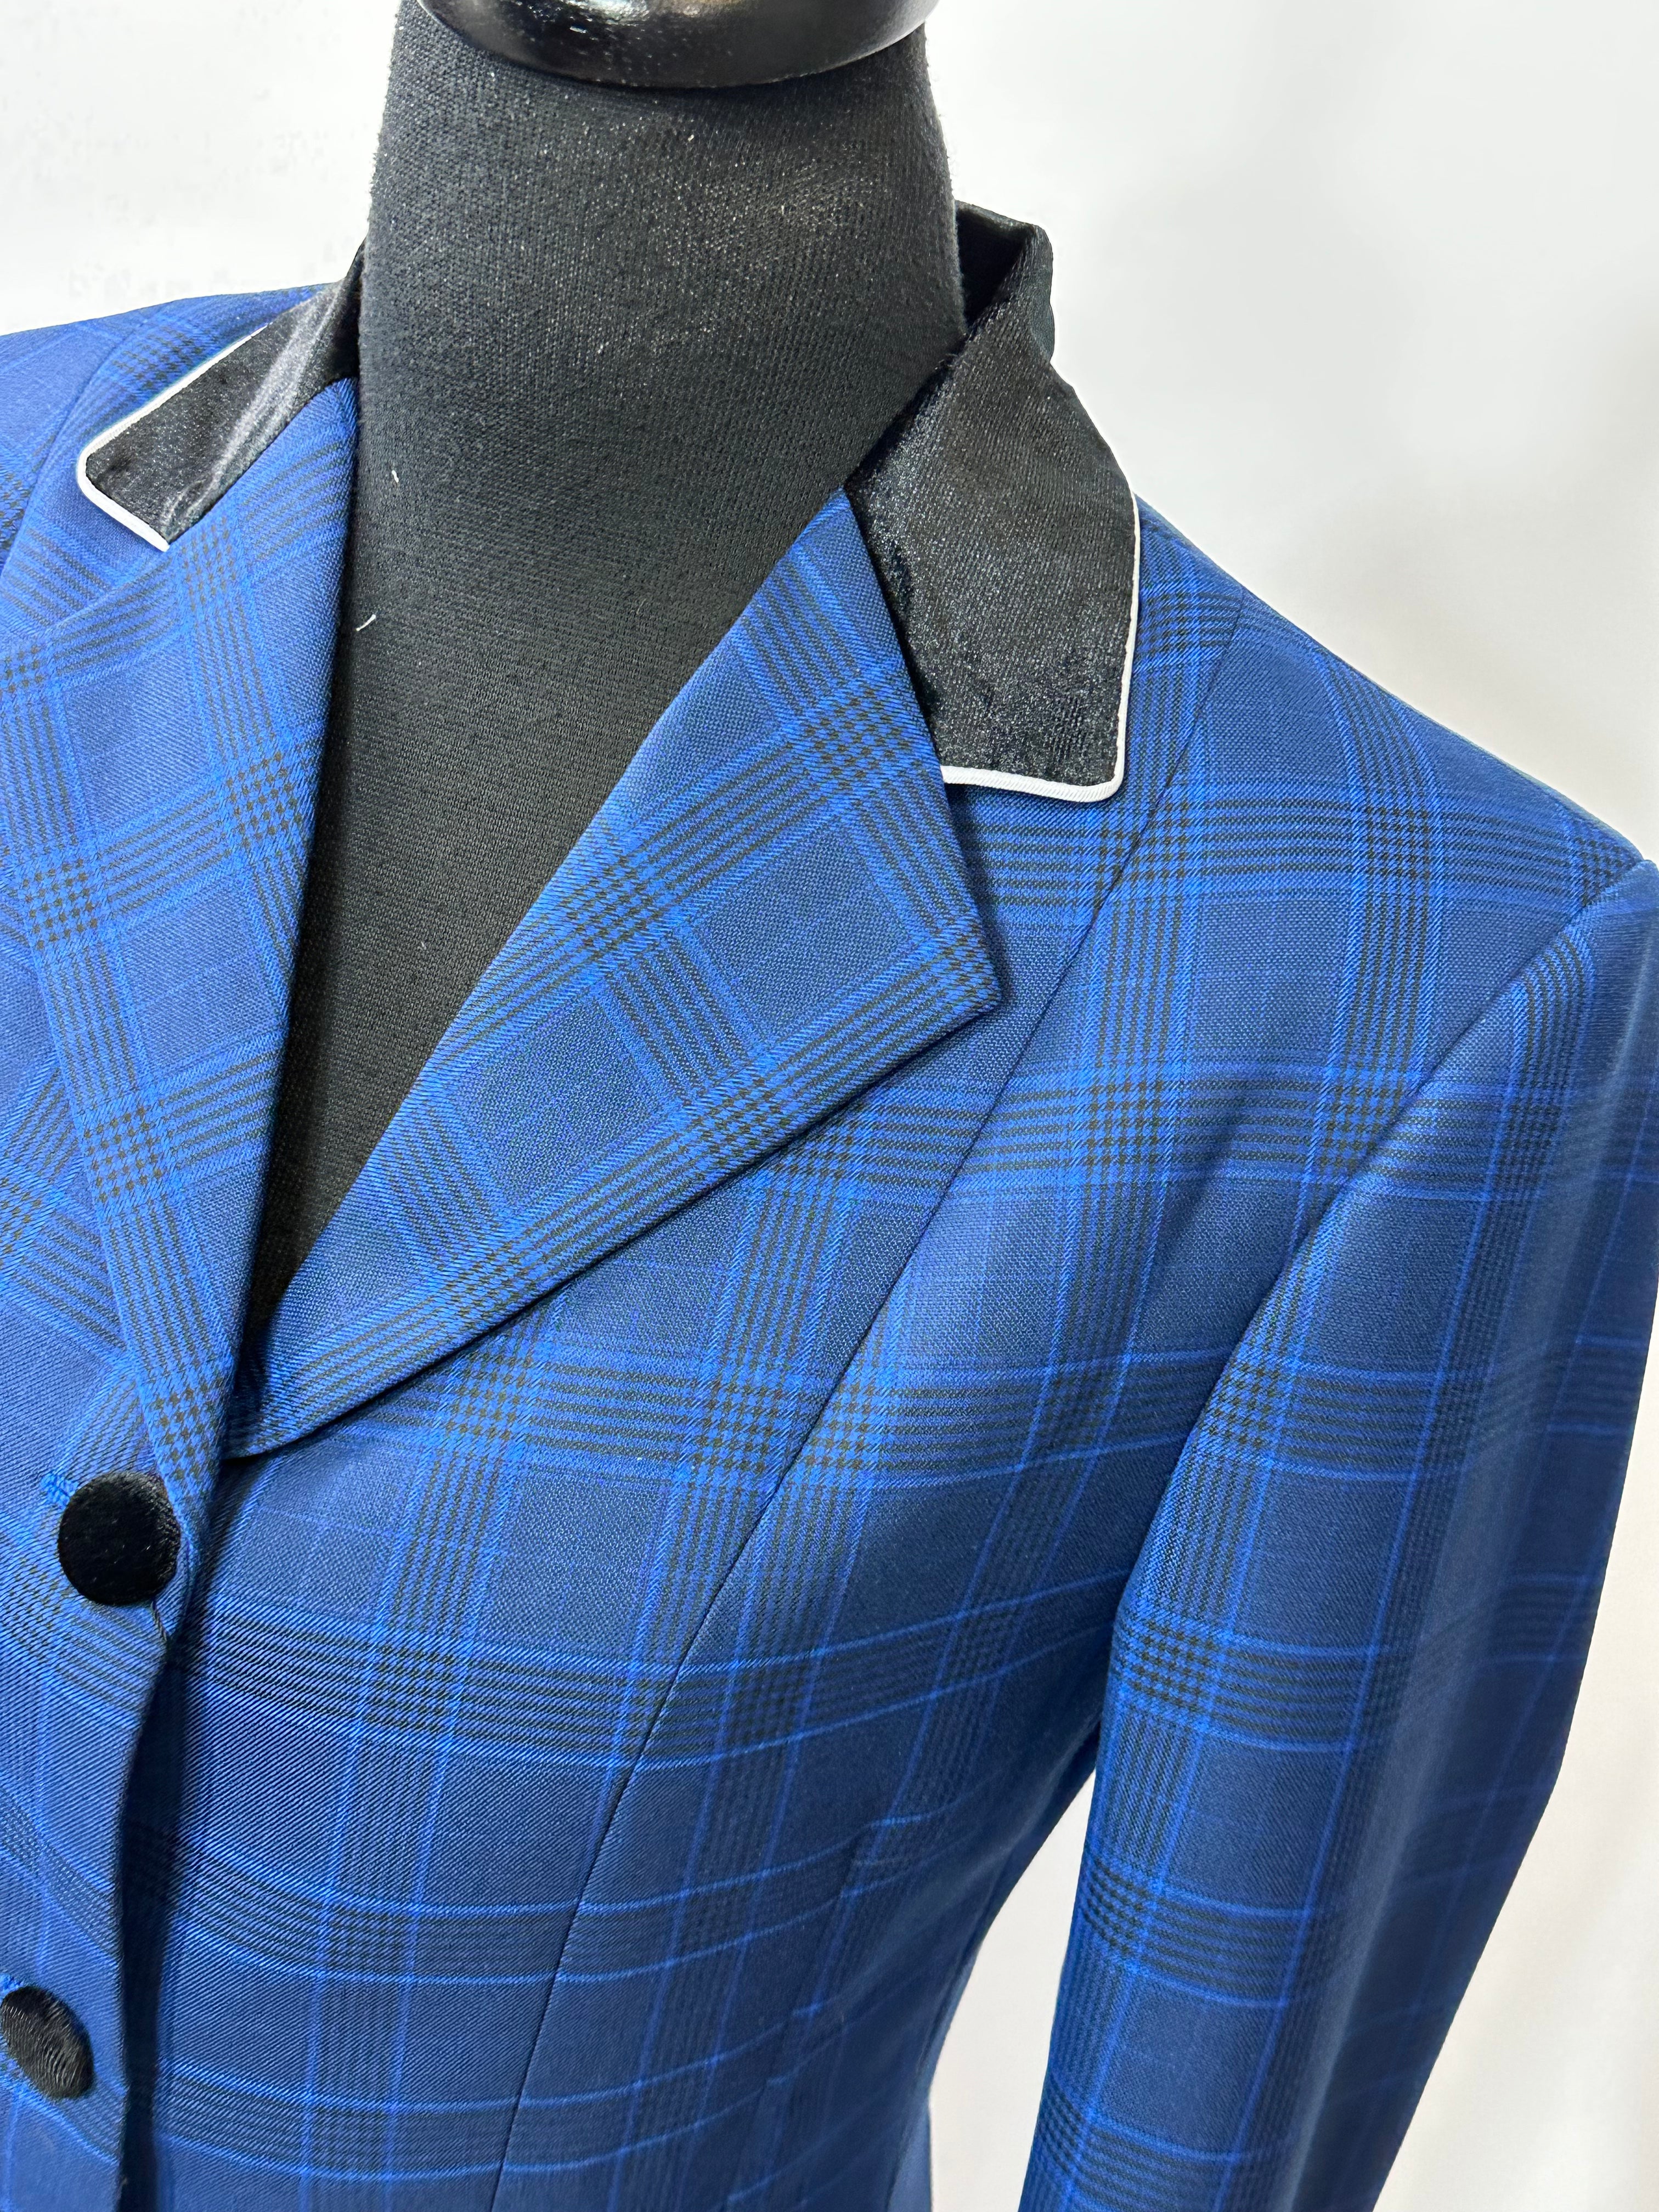 English Show Coat Blue and Black Plaid Fabric Code R182